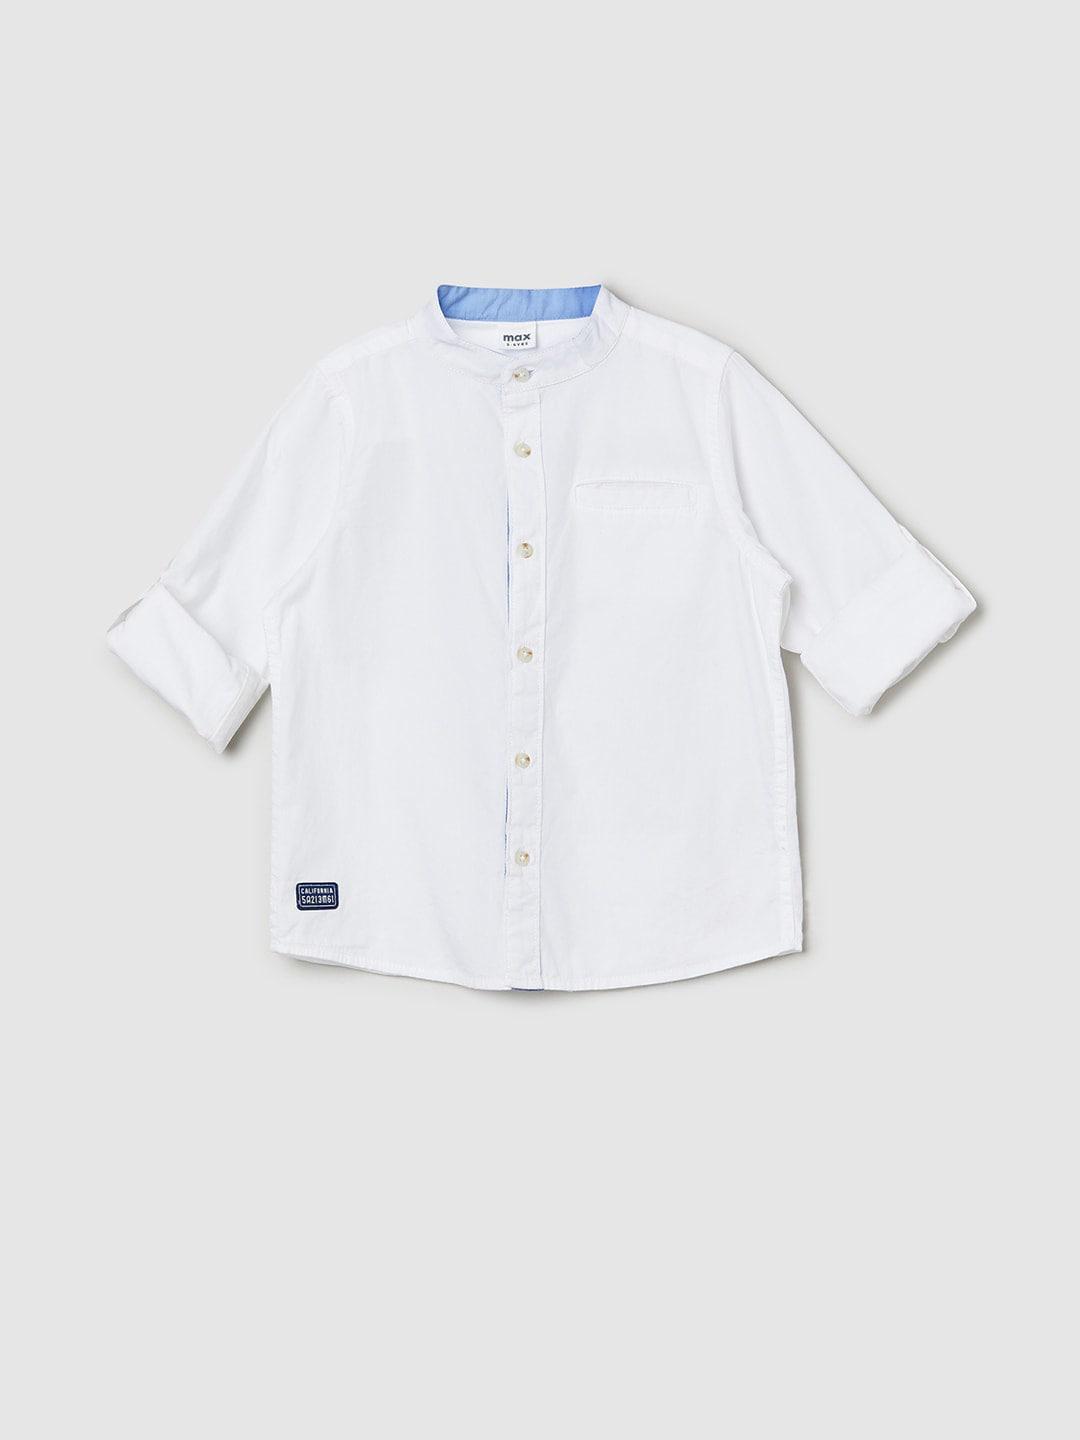 max Boys Pure Cotton Casual Shirt